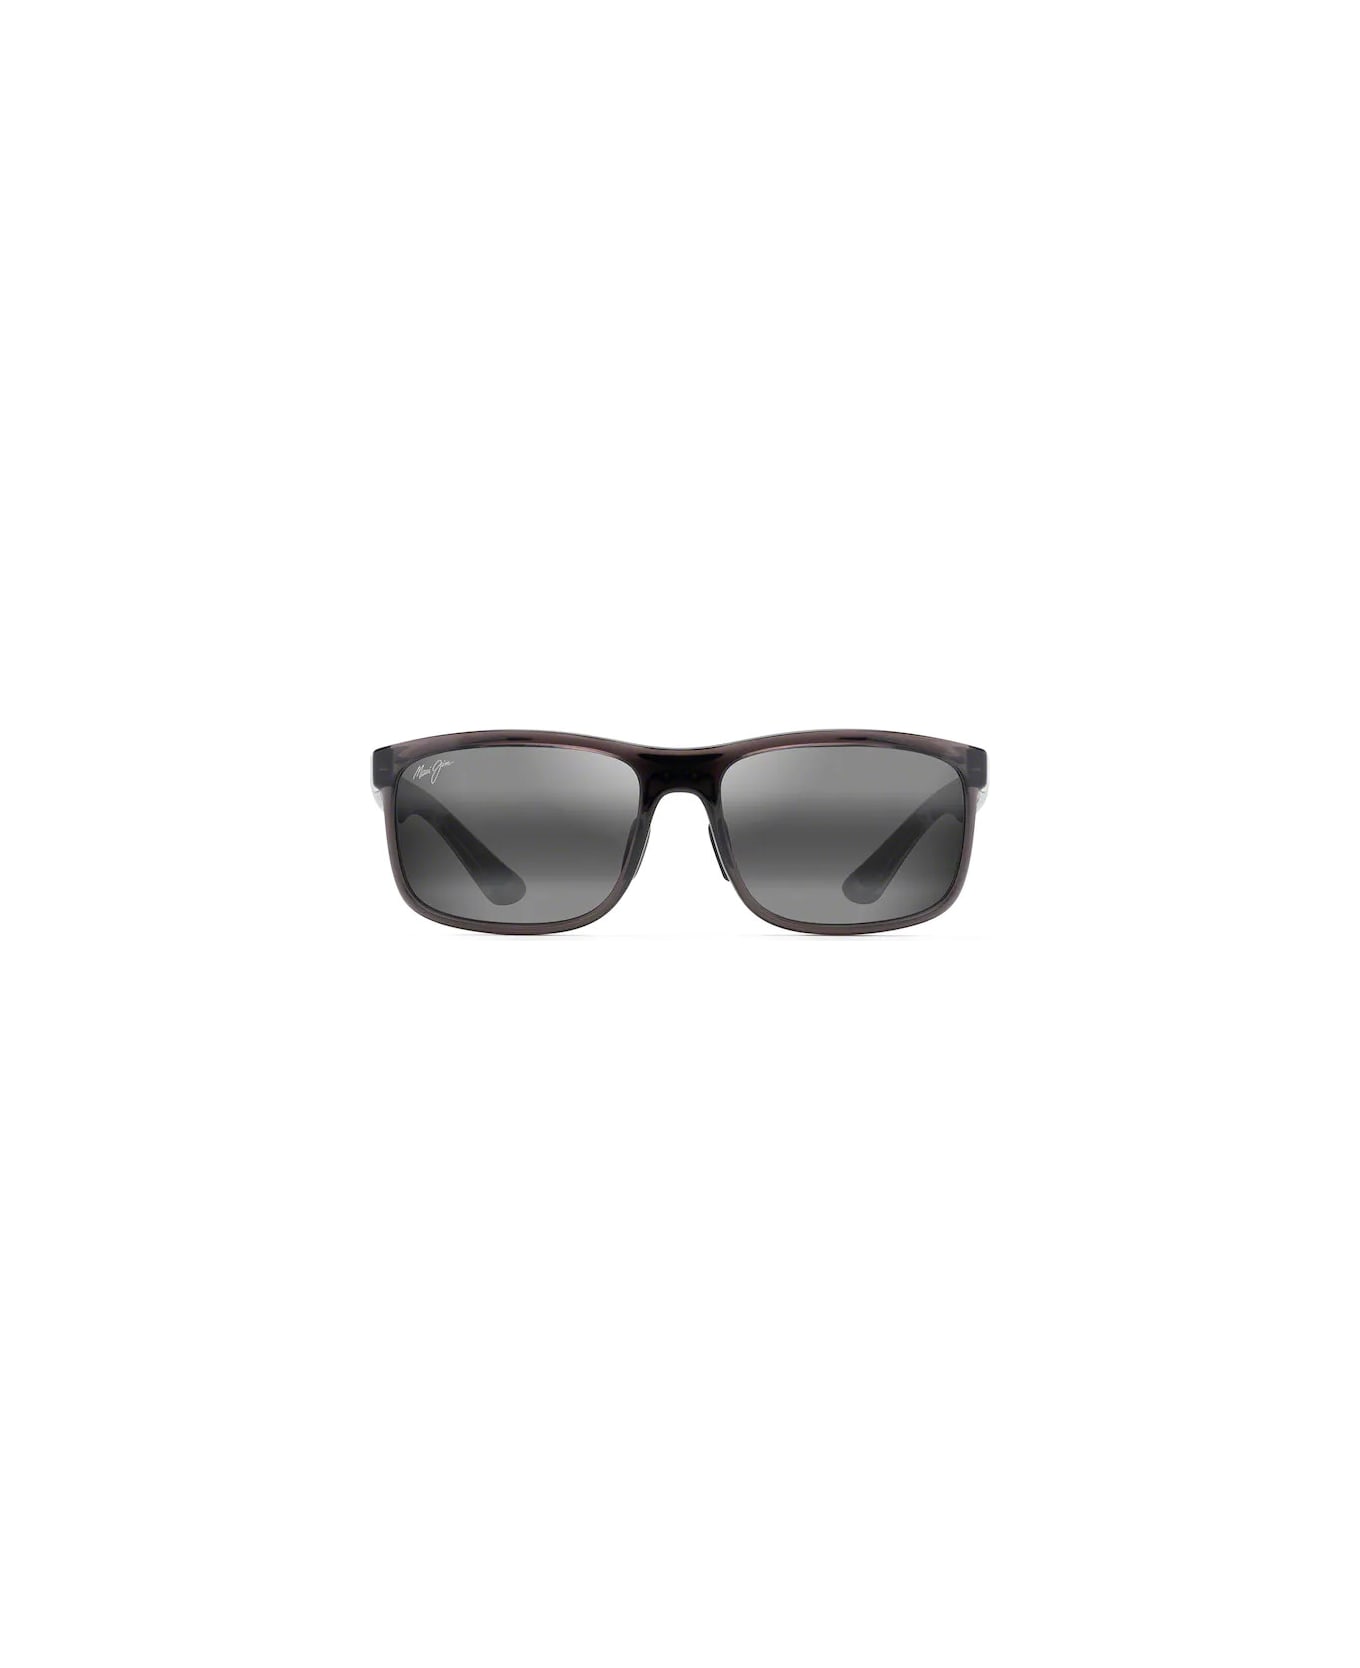 Maui Jim MJ449-11 Sunglasses - Grigio